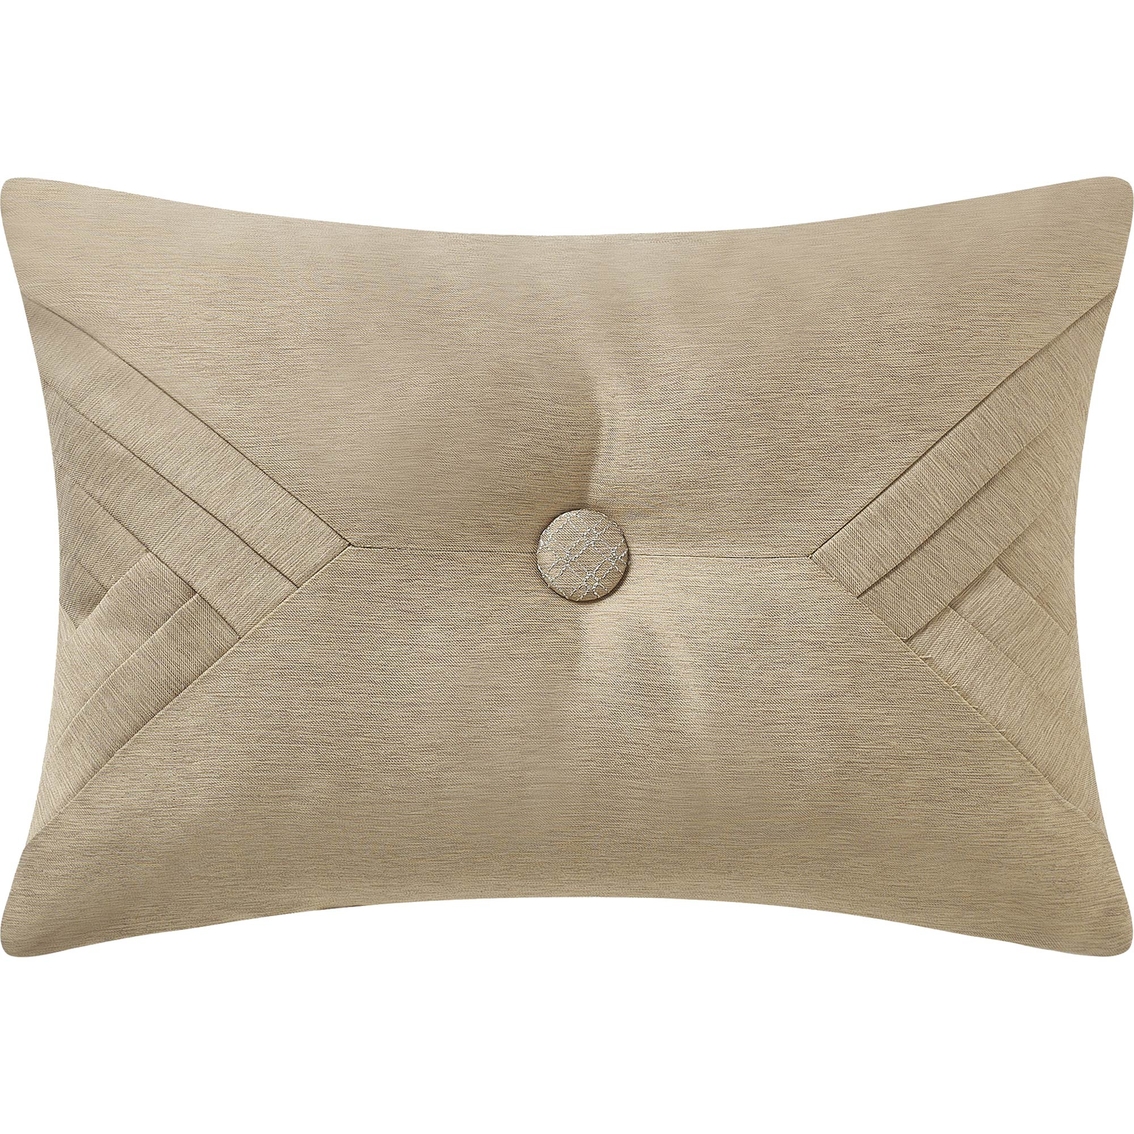 Waterford Maritana Decorative Pillows 3 pc. Set - Image 7 of 8